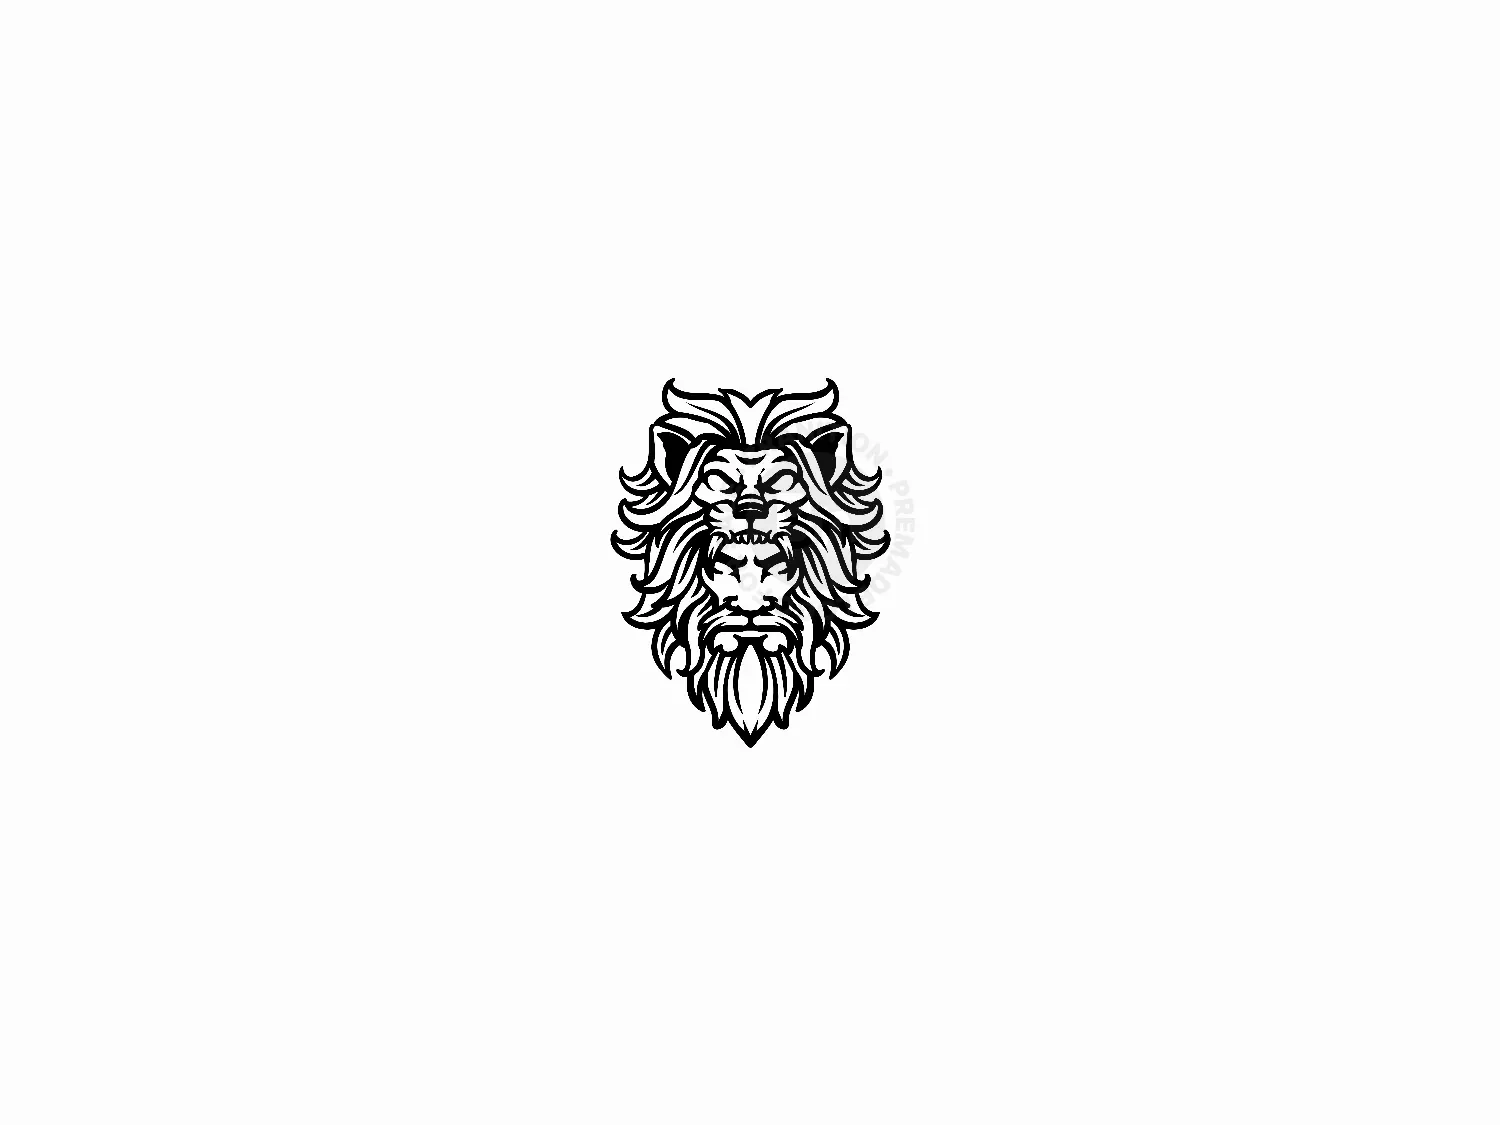 Hercules esport mascot logo design - Stock Illustration [94865429] - PIXTA